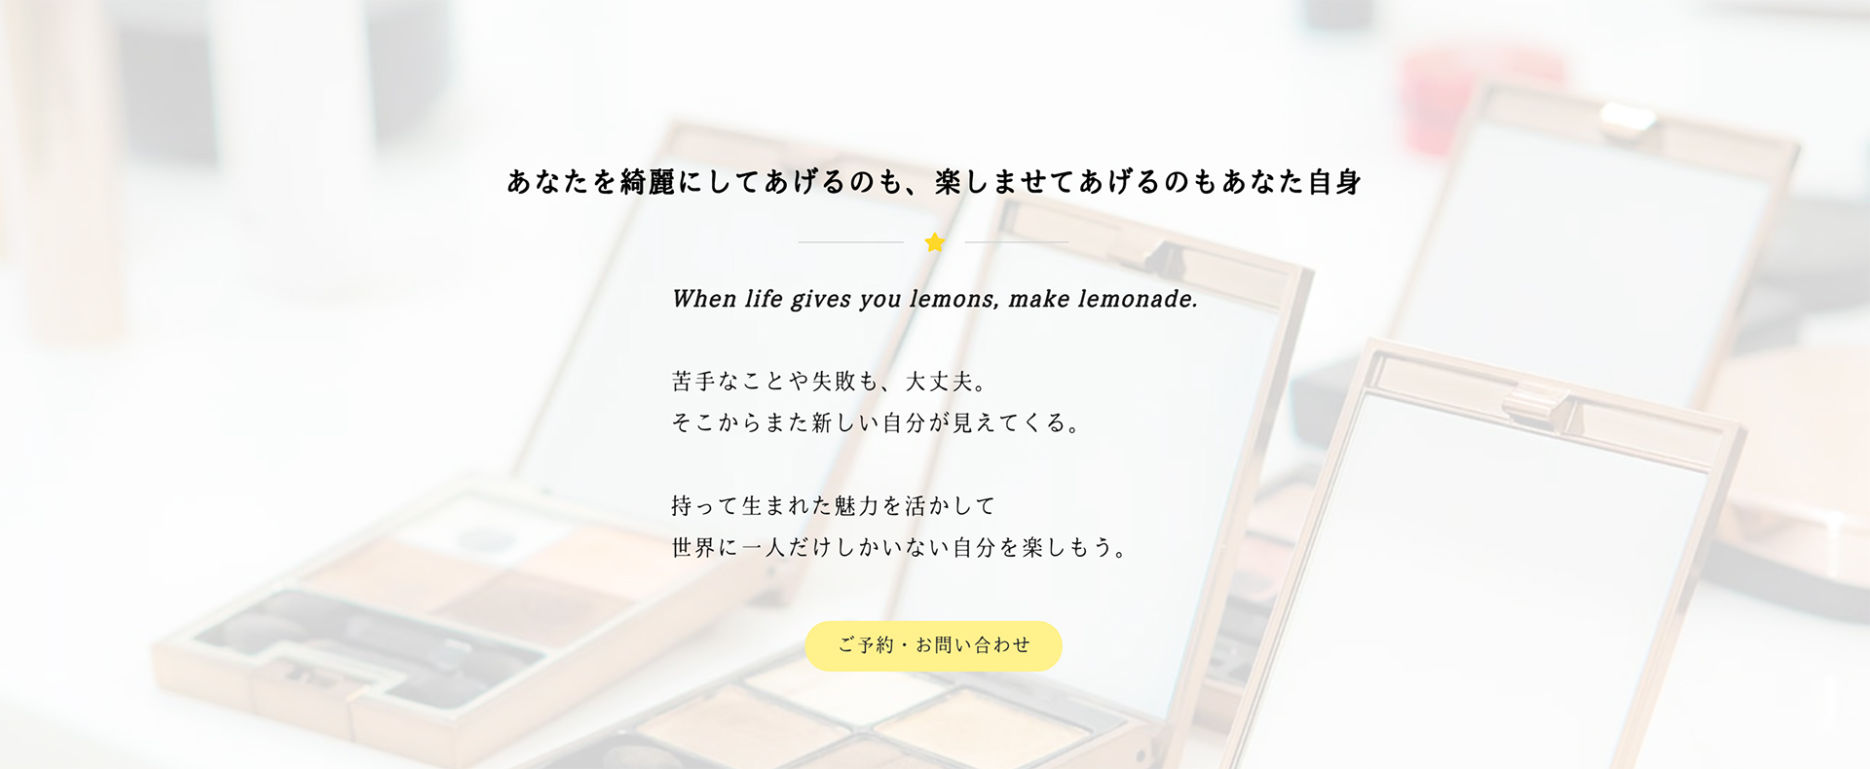 lemonade 6 - ホームページ制作事例。仙台のファッションコンサルティングサロン　Lemonade様